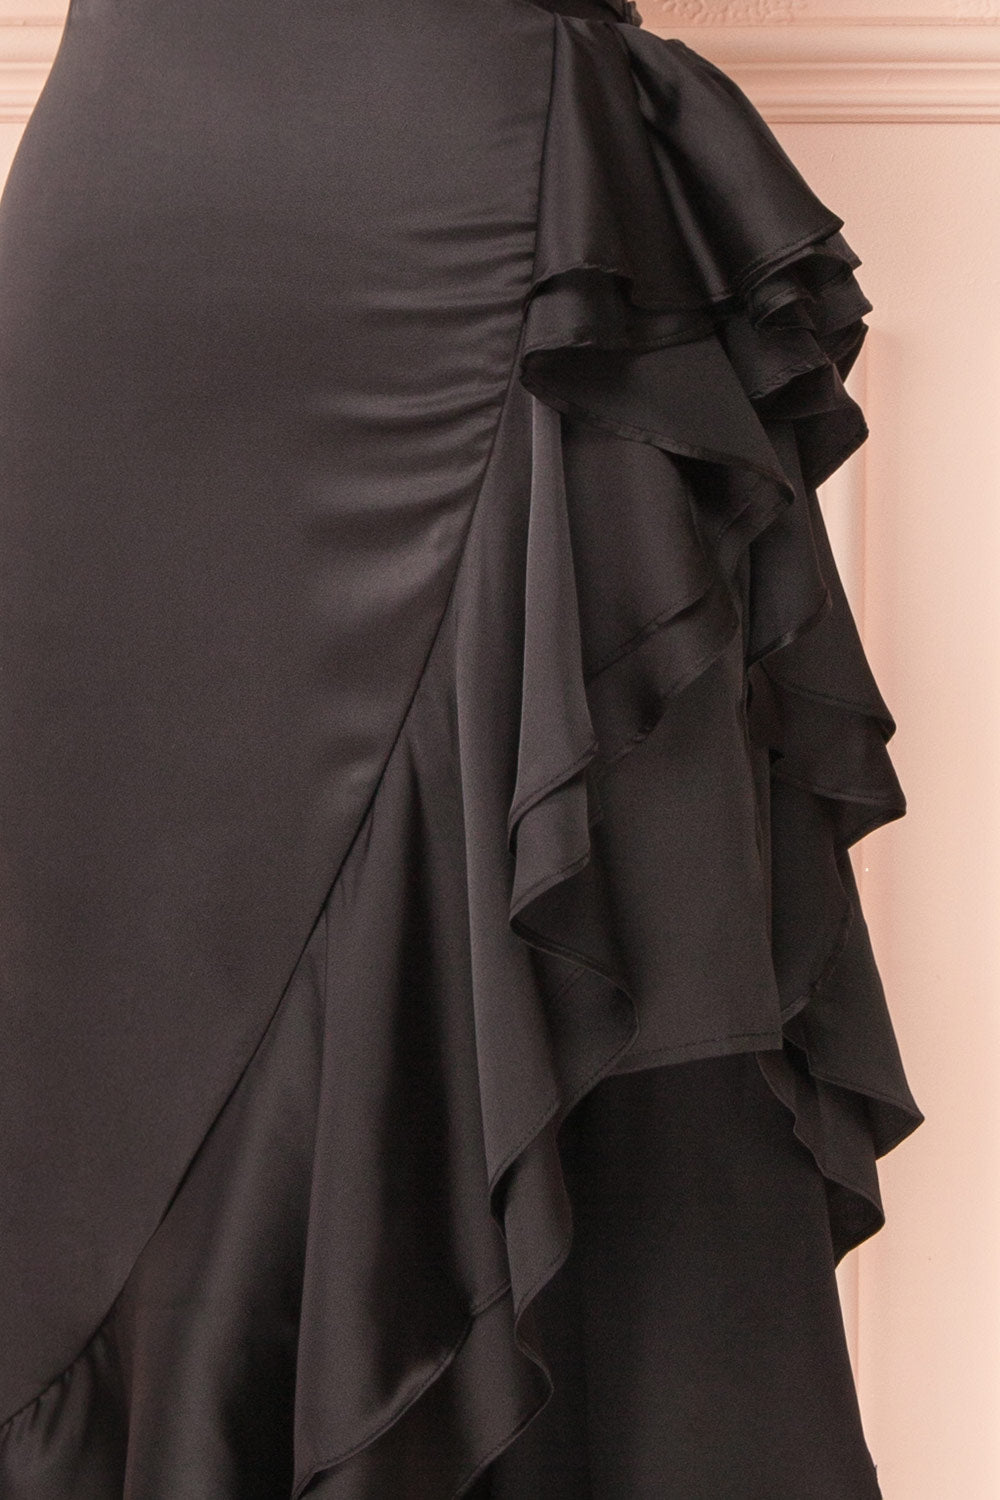 Eirlys Black | Asymmetrical Satin Dress w/ Ruffles